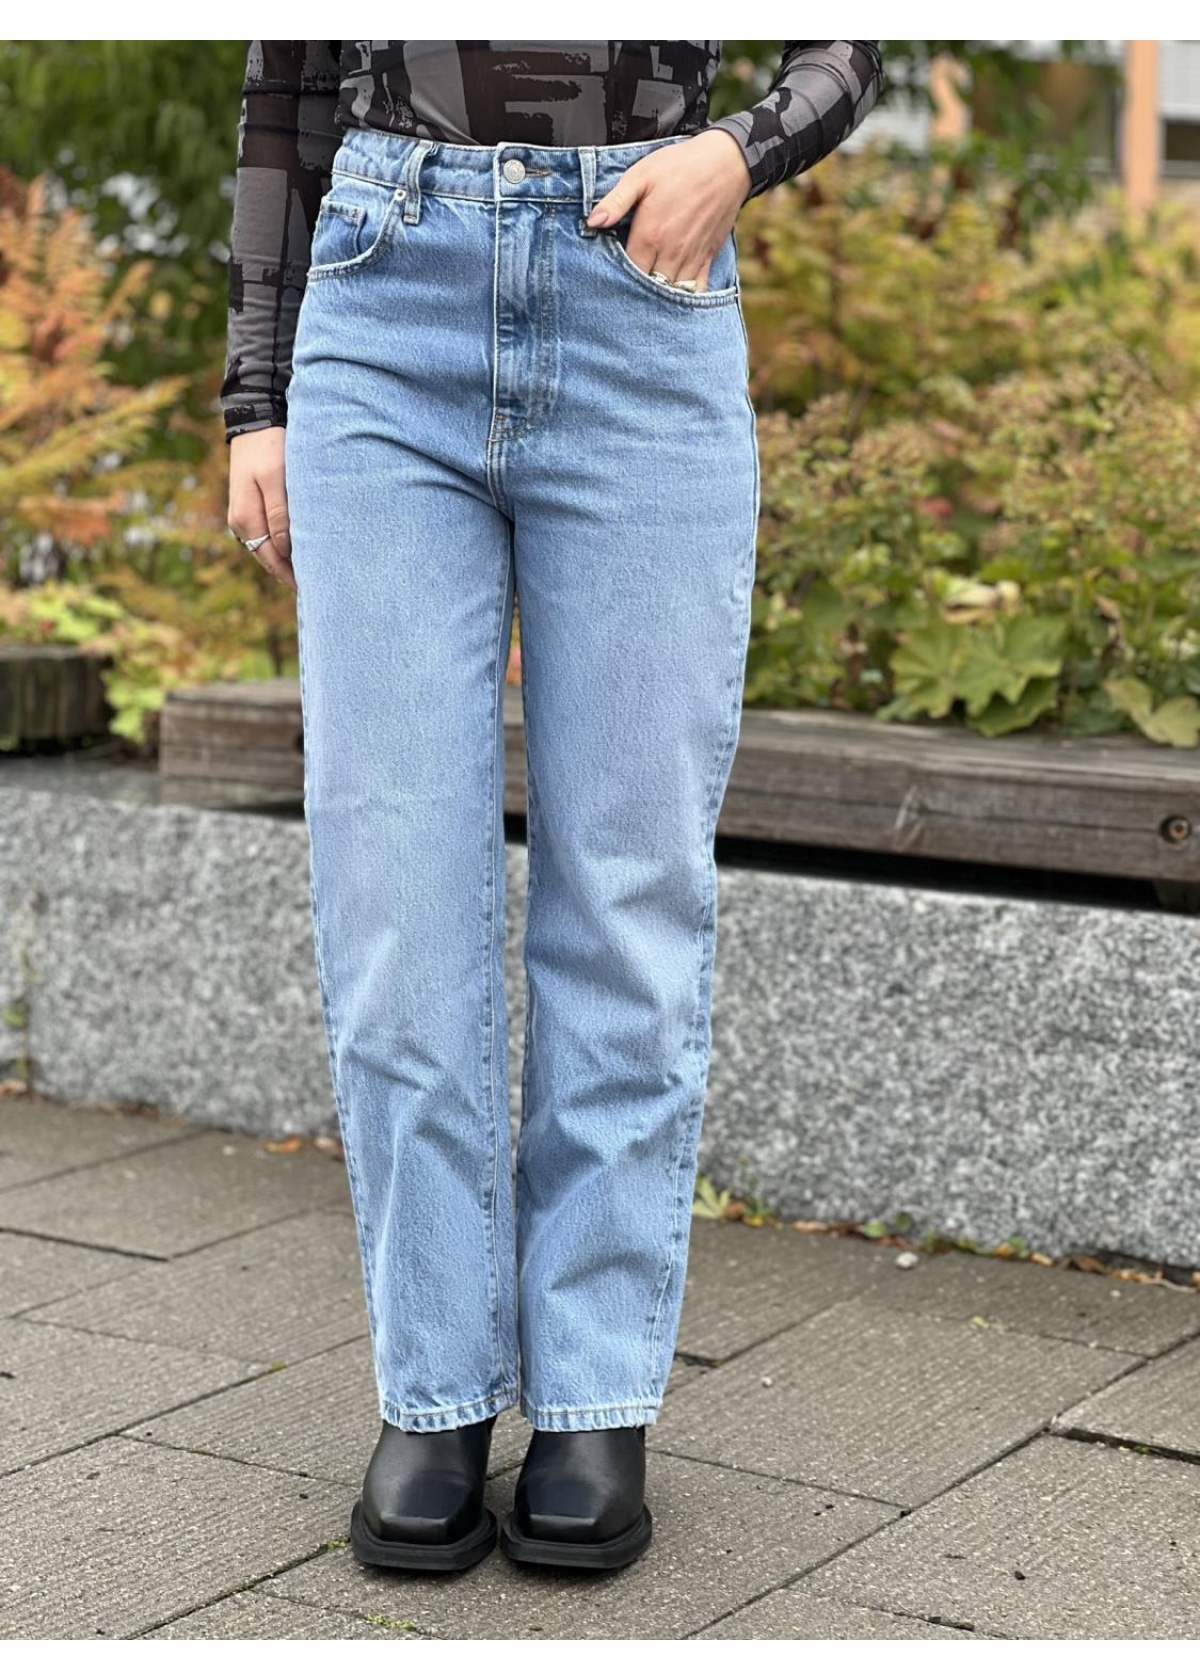 Camilla Pihl Denim Holly jeans light blue